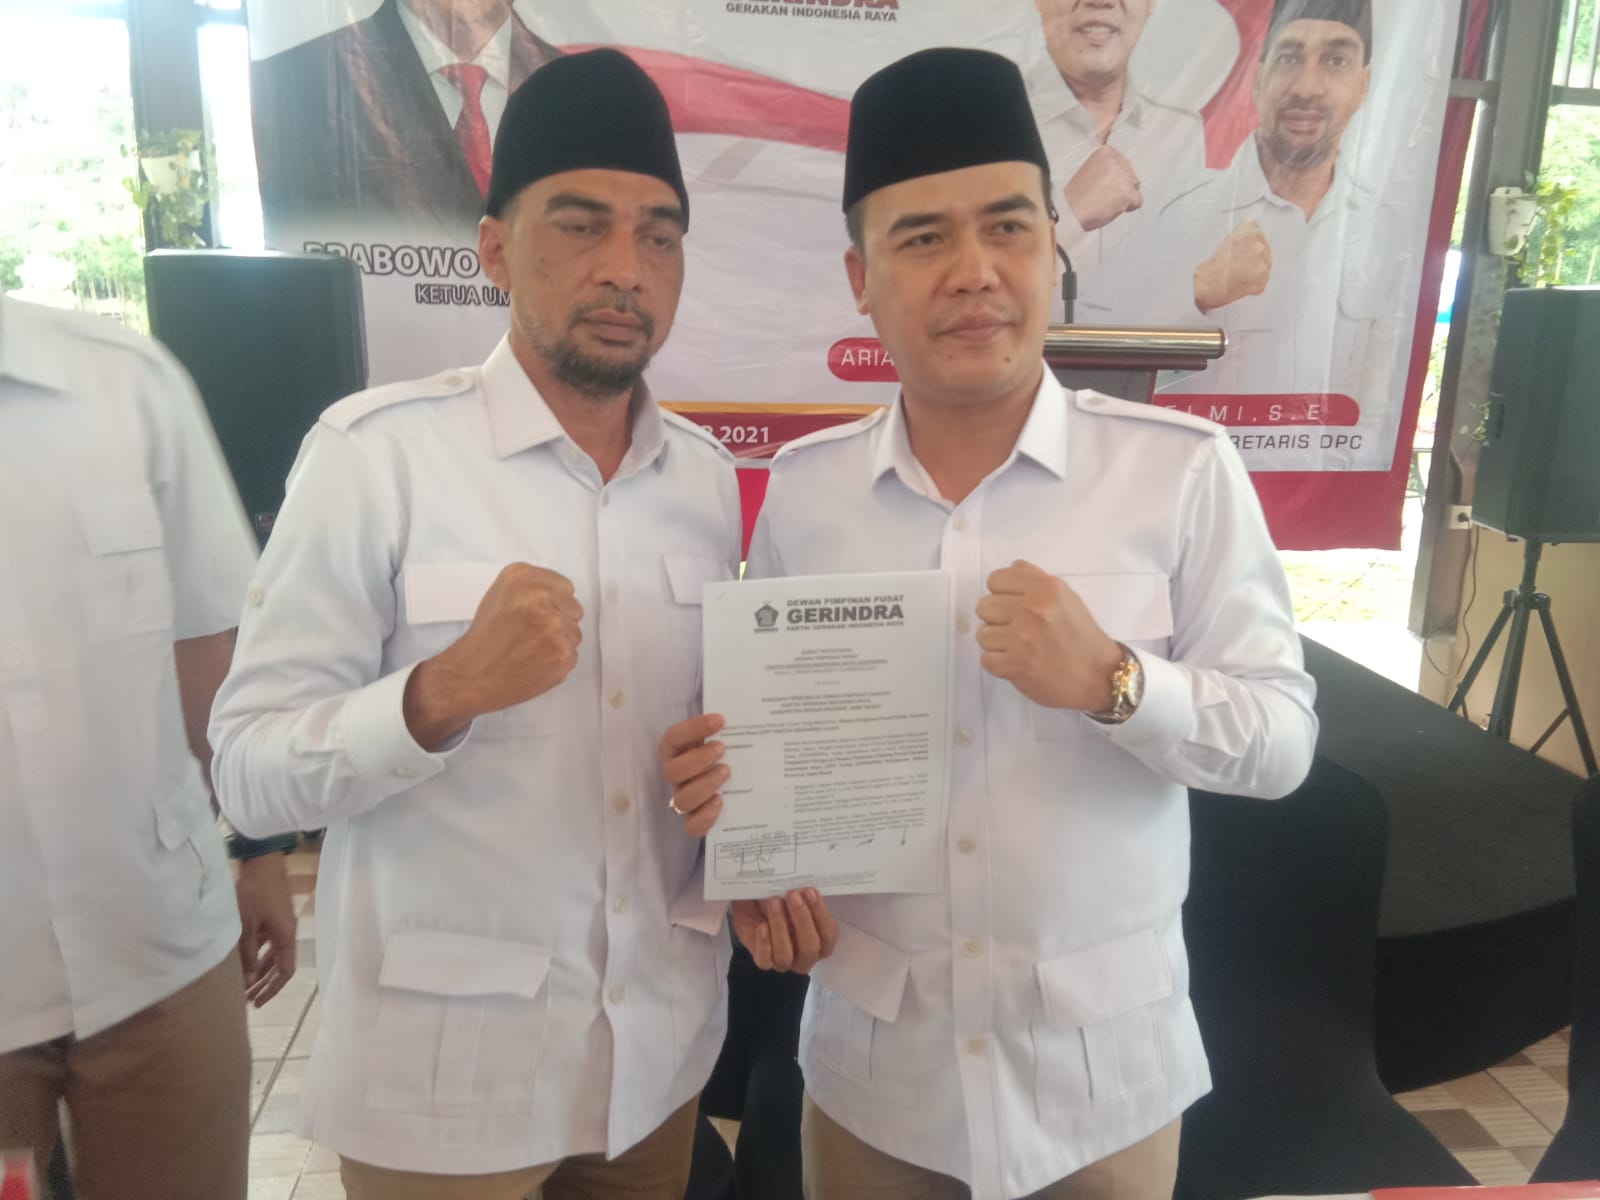 Terpilih Ketua DPC Gerindra, Aria Optimis Berjuang Untuk Rakyat dan Prabowo Jadi Presiden 2024